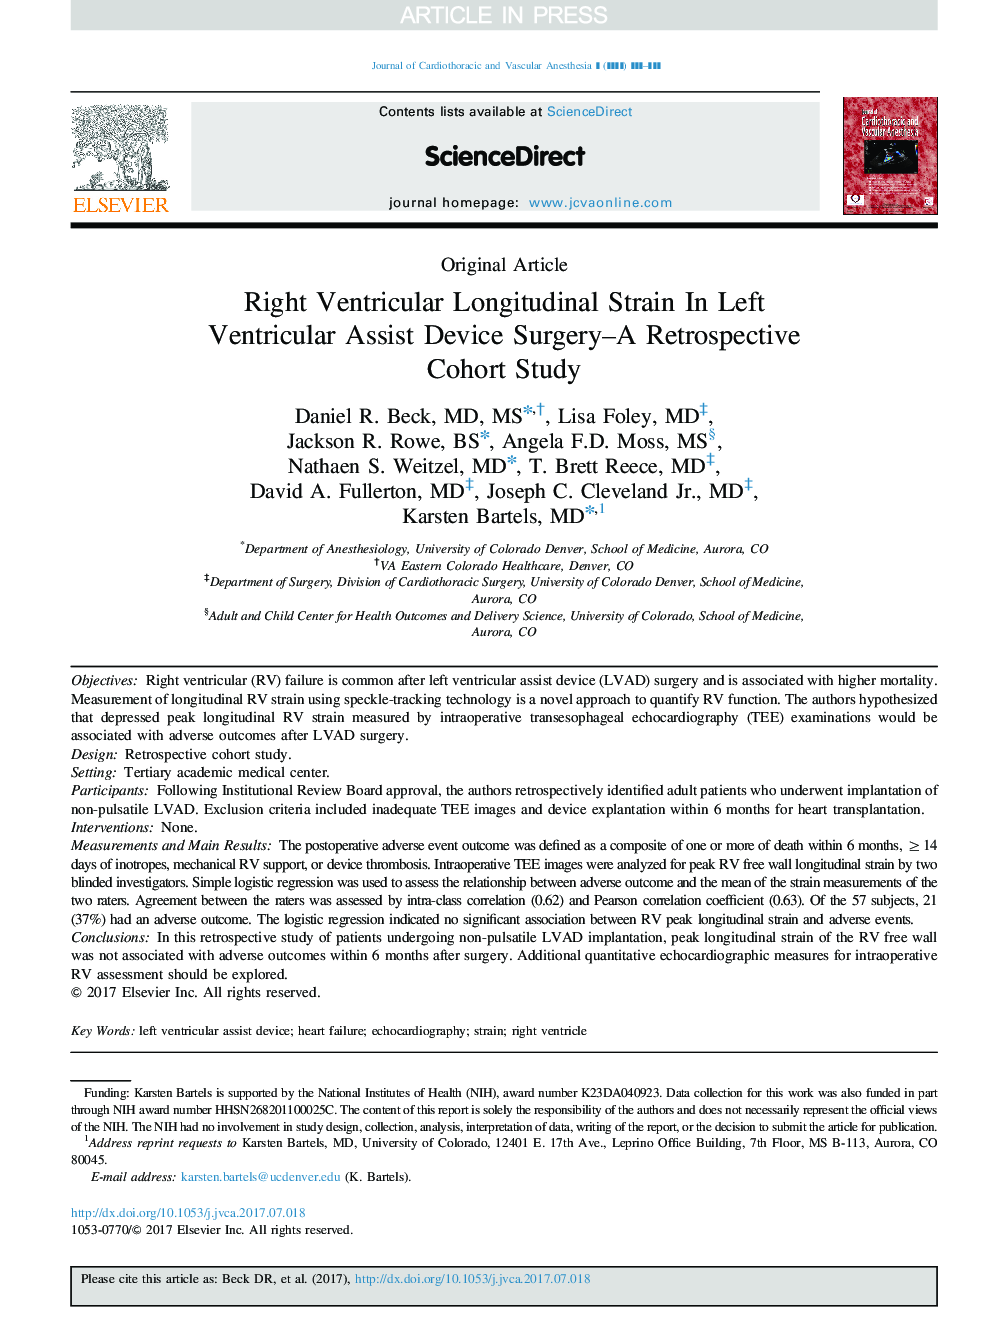 Right Ventricular Longitudinal Strain In Left Ventricular Assist Device Surgery-A Retrospective Cohort Study